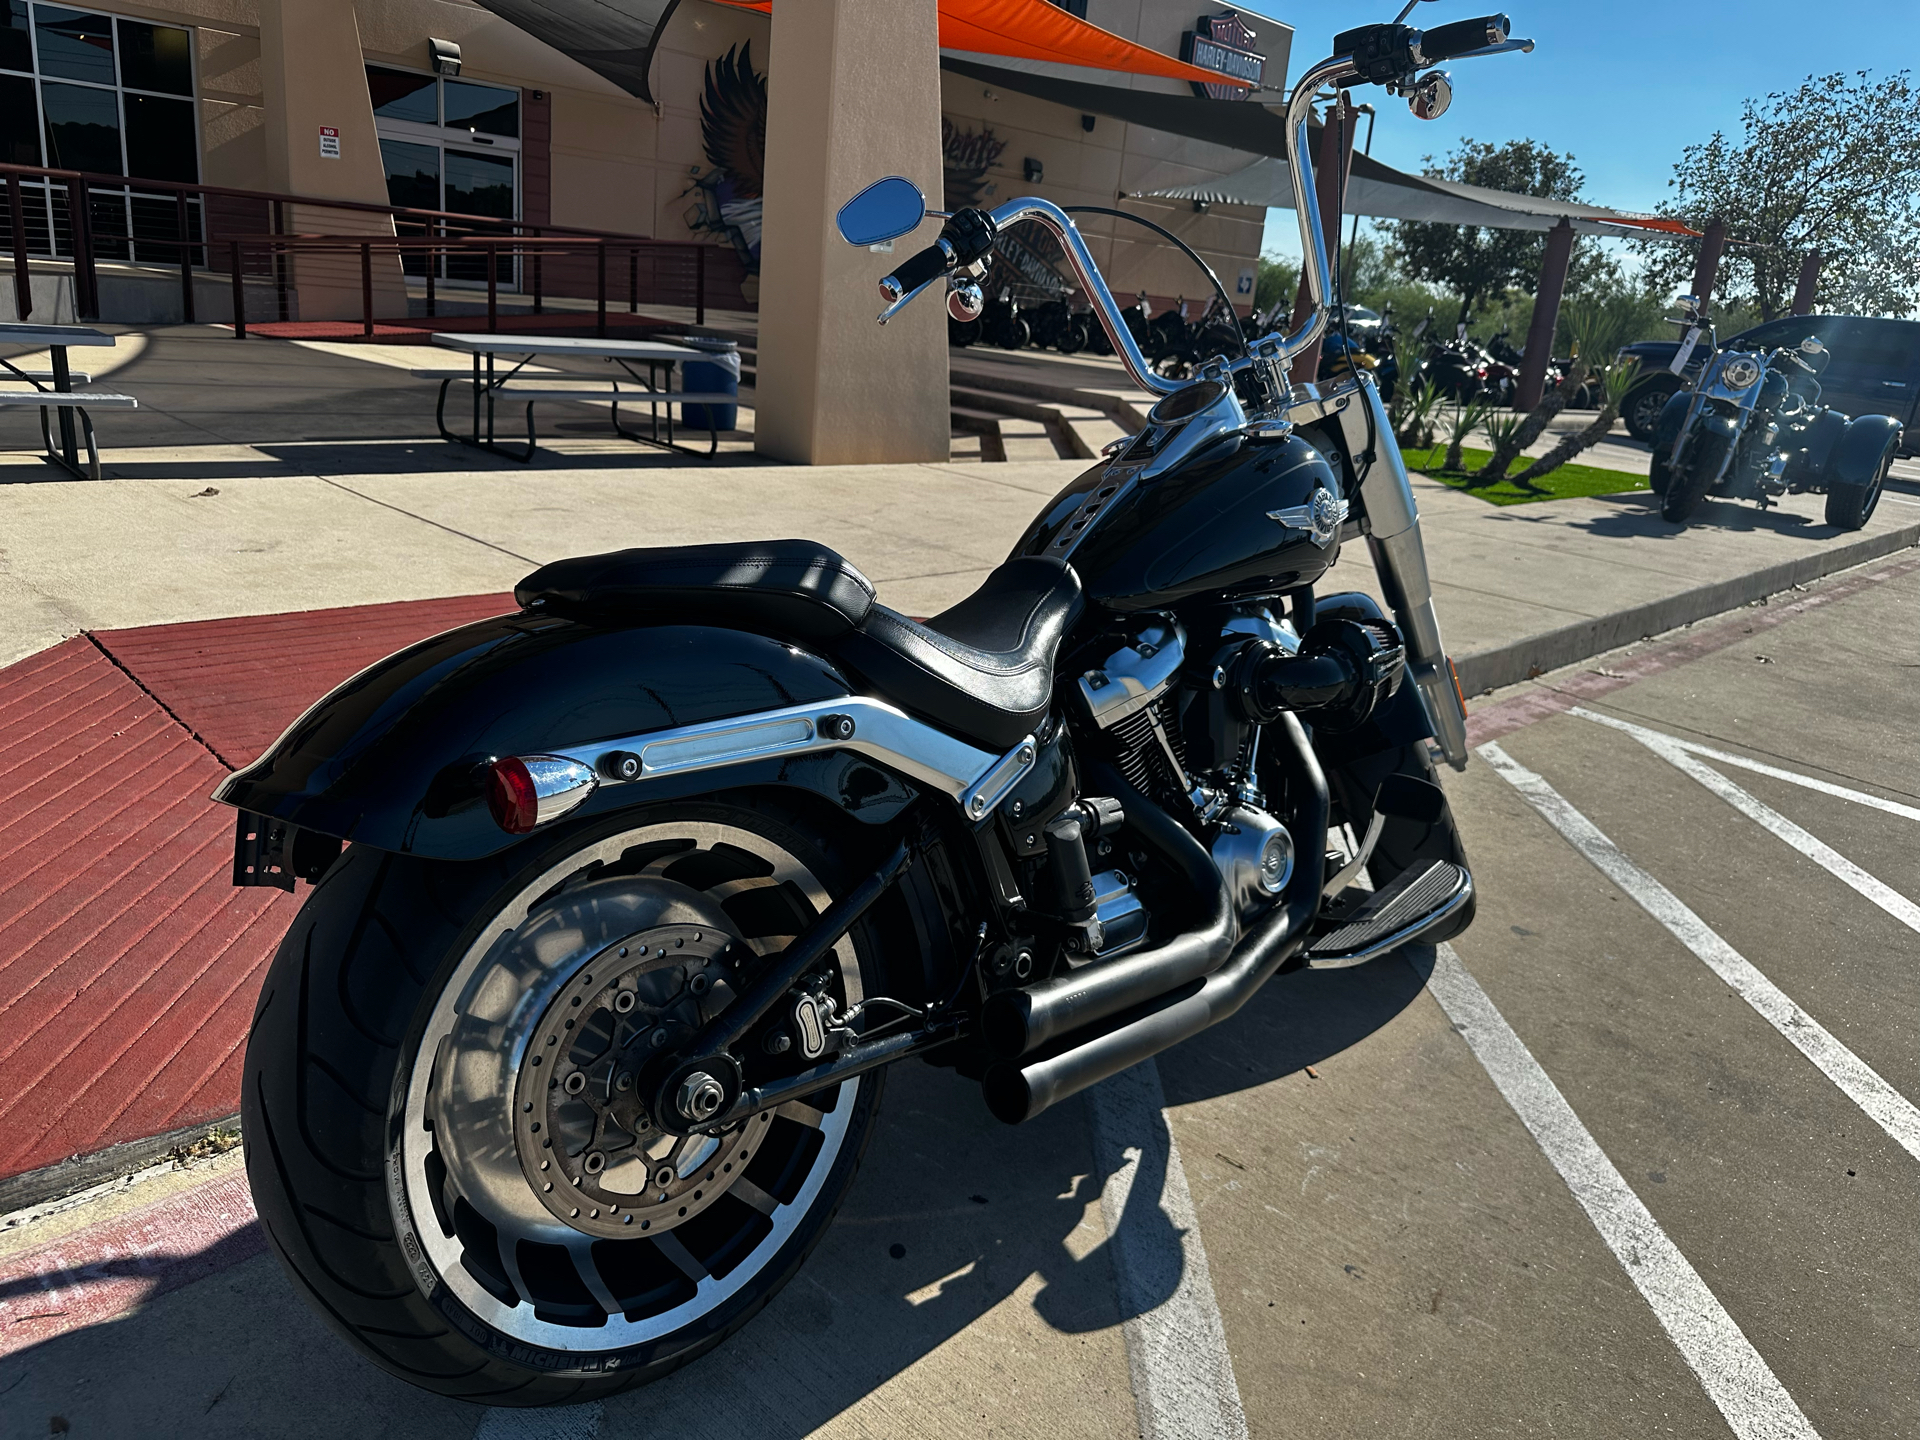 2019 Harley-Davidson Fat Boy® 107 in San Antonio, Texas - Photo 8